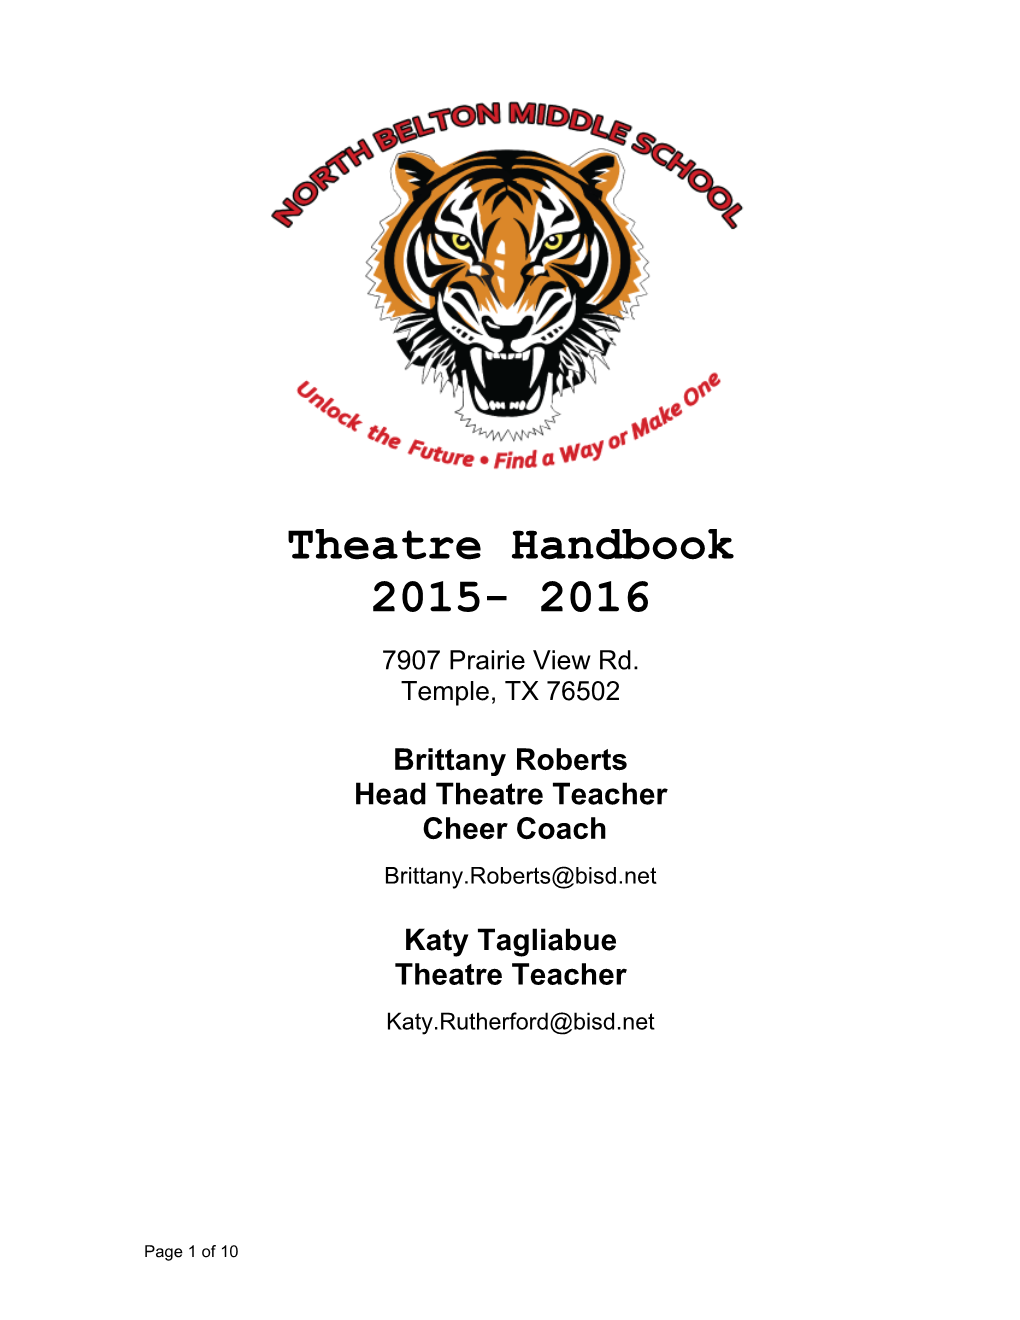 Theatre Handbook